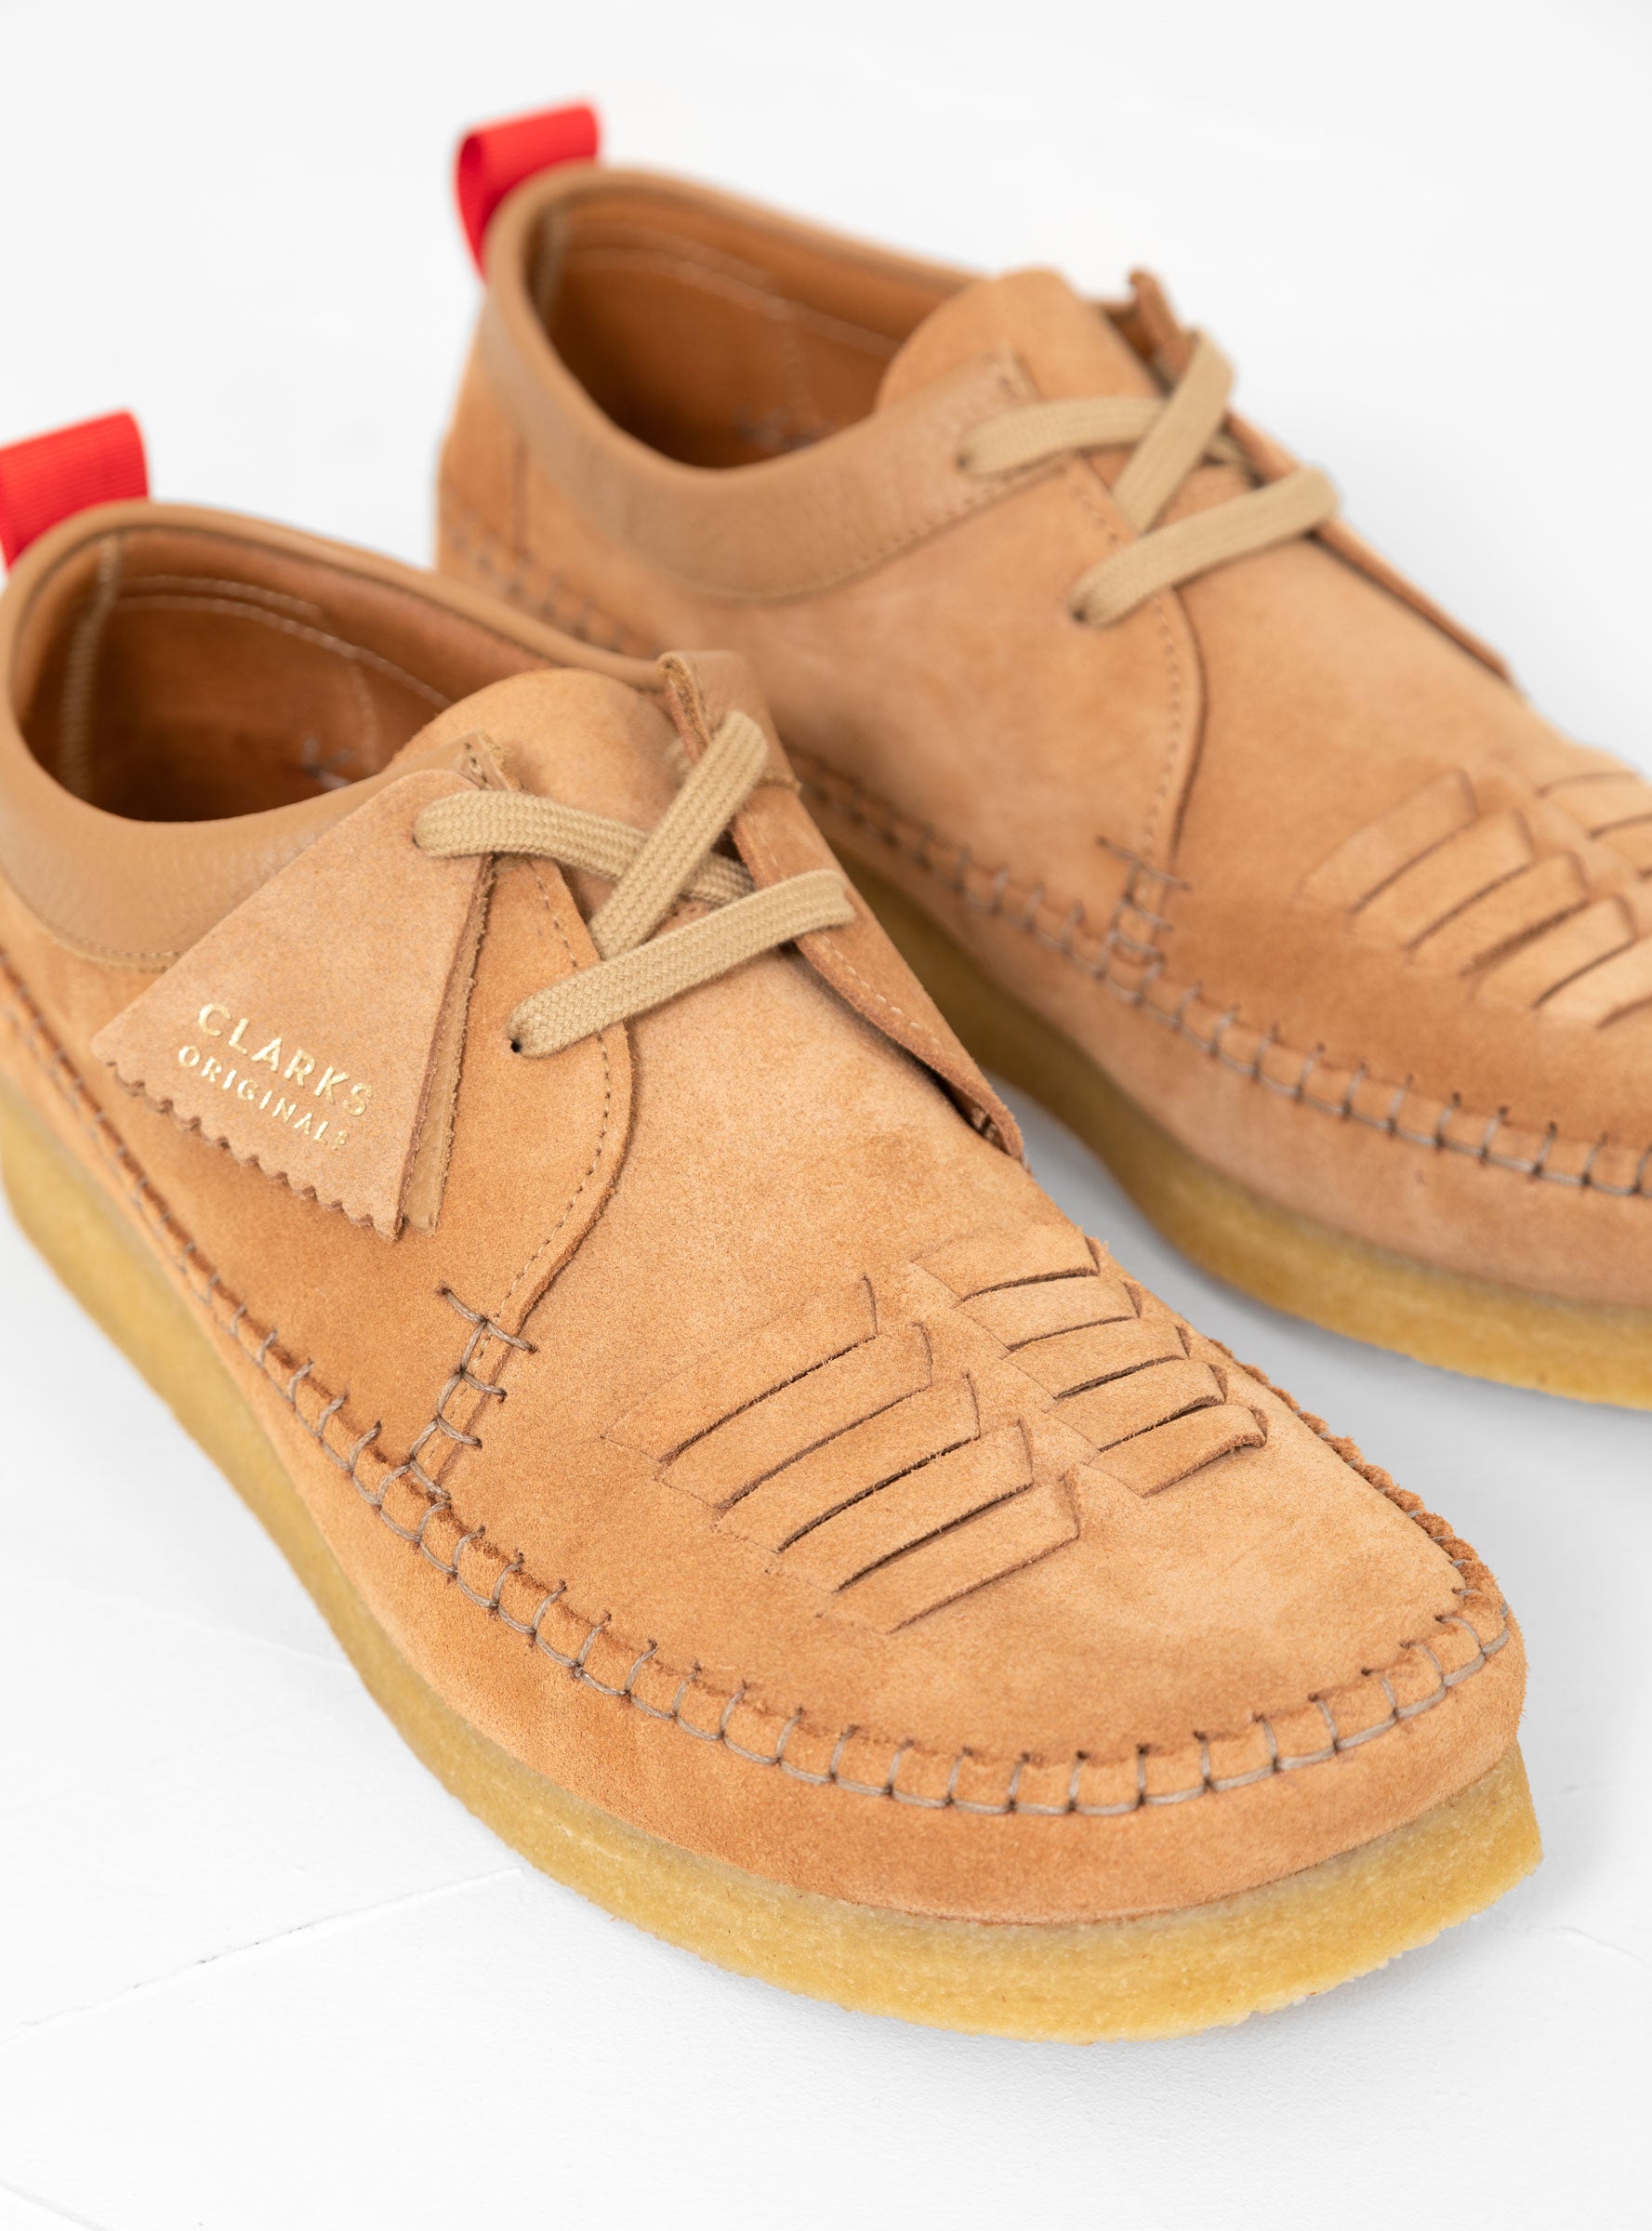 Weaver Weft Shoes Light Tan Suede by Clarks Originals | Couverture